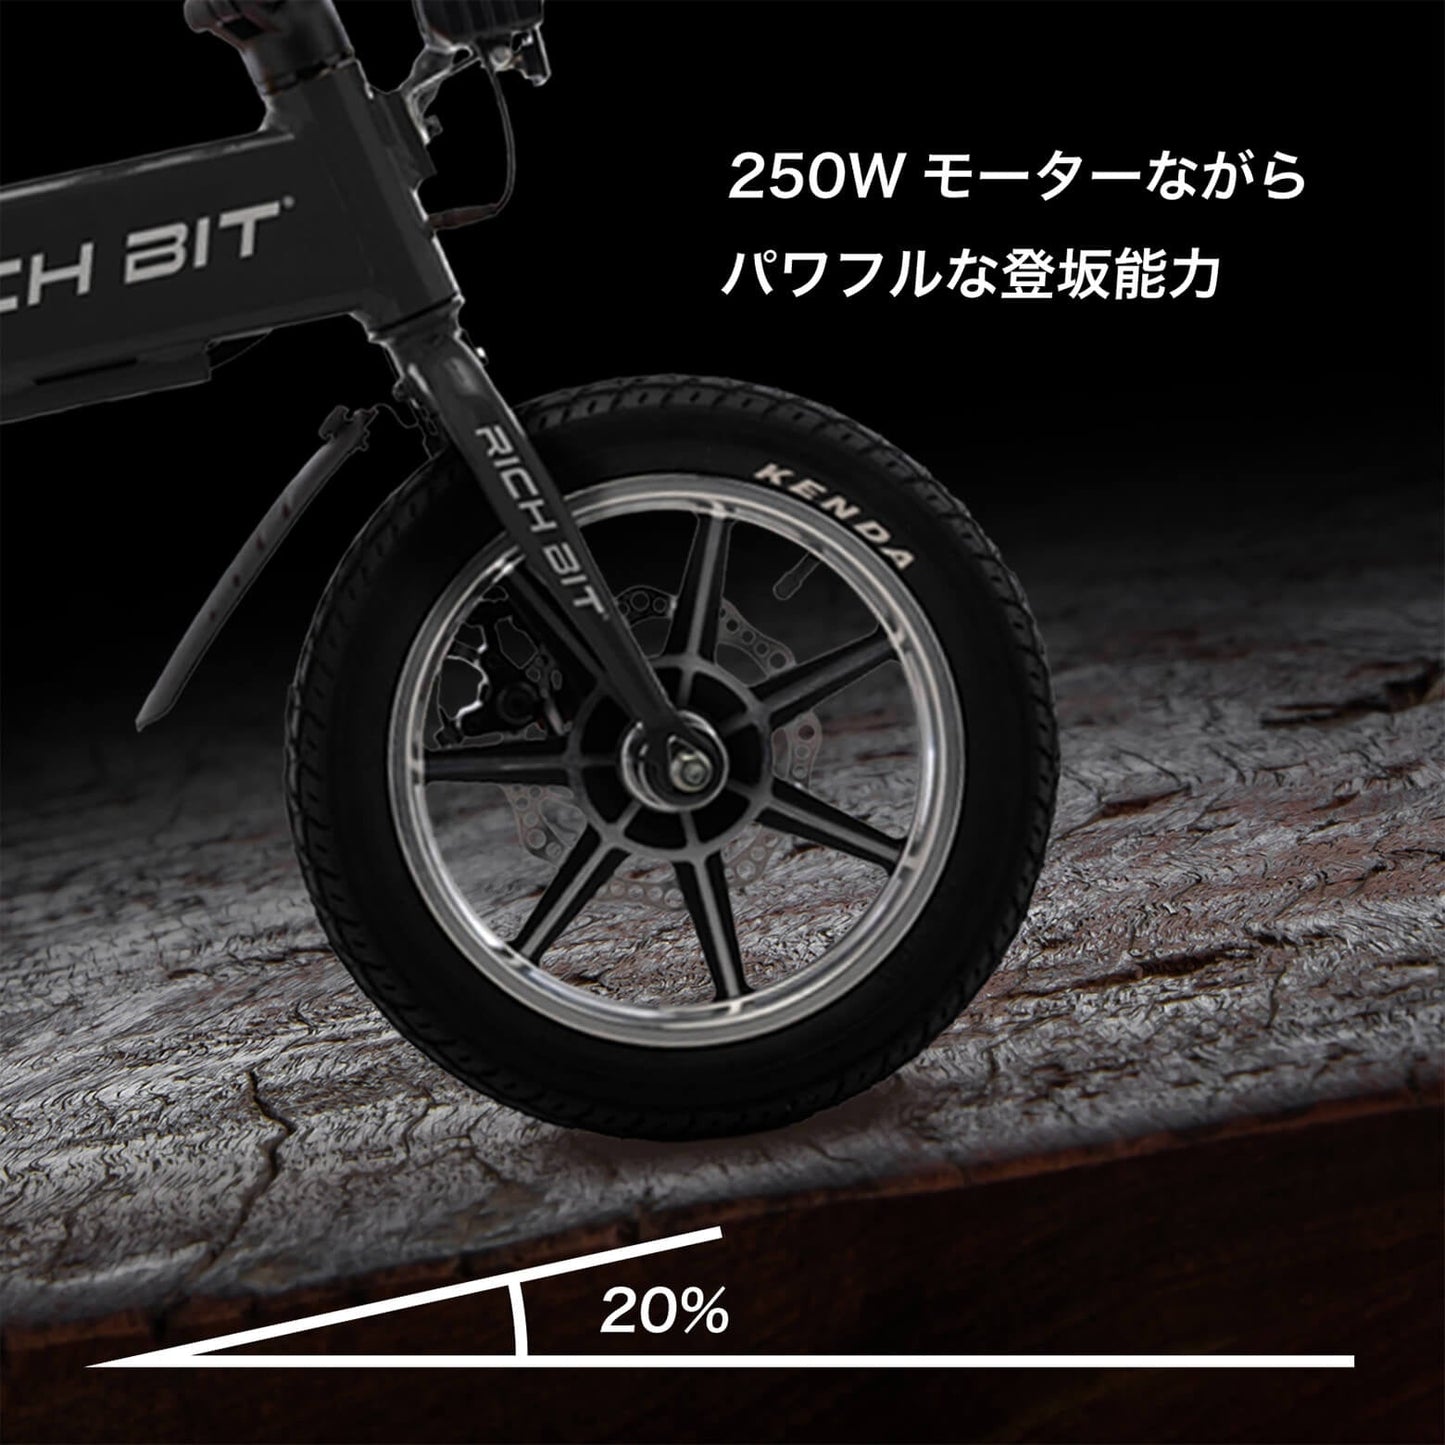 RICHBIT CITY（シティブラック）電動バイク 特定小型原付モデル 公道走行可能 性能認定適合【予約購入/18%OFF】